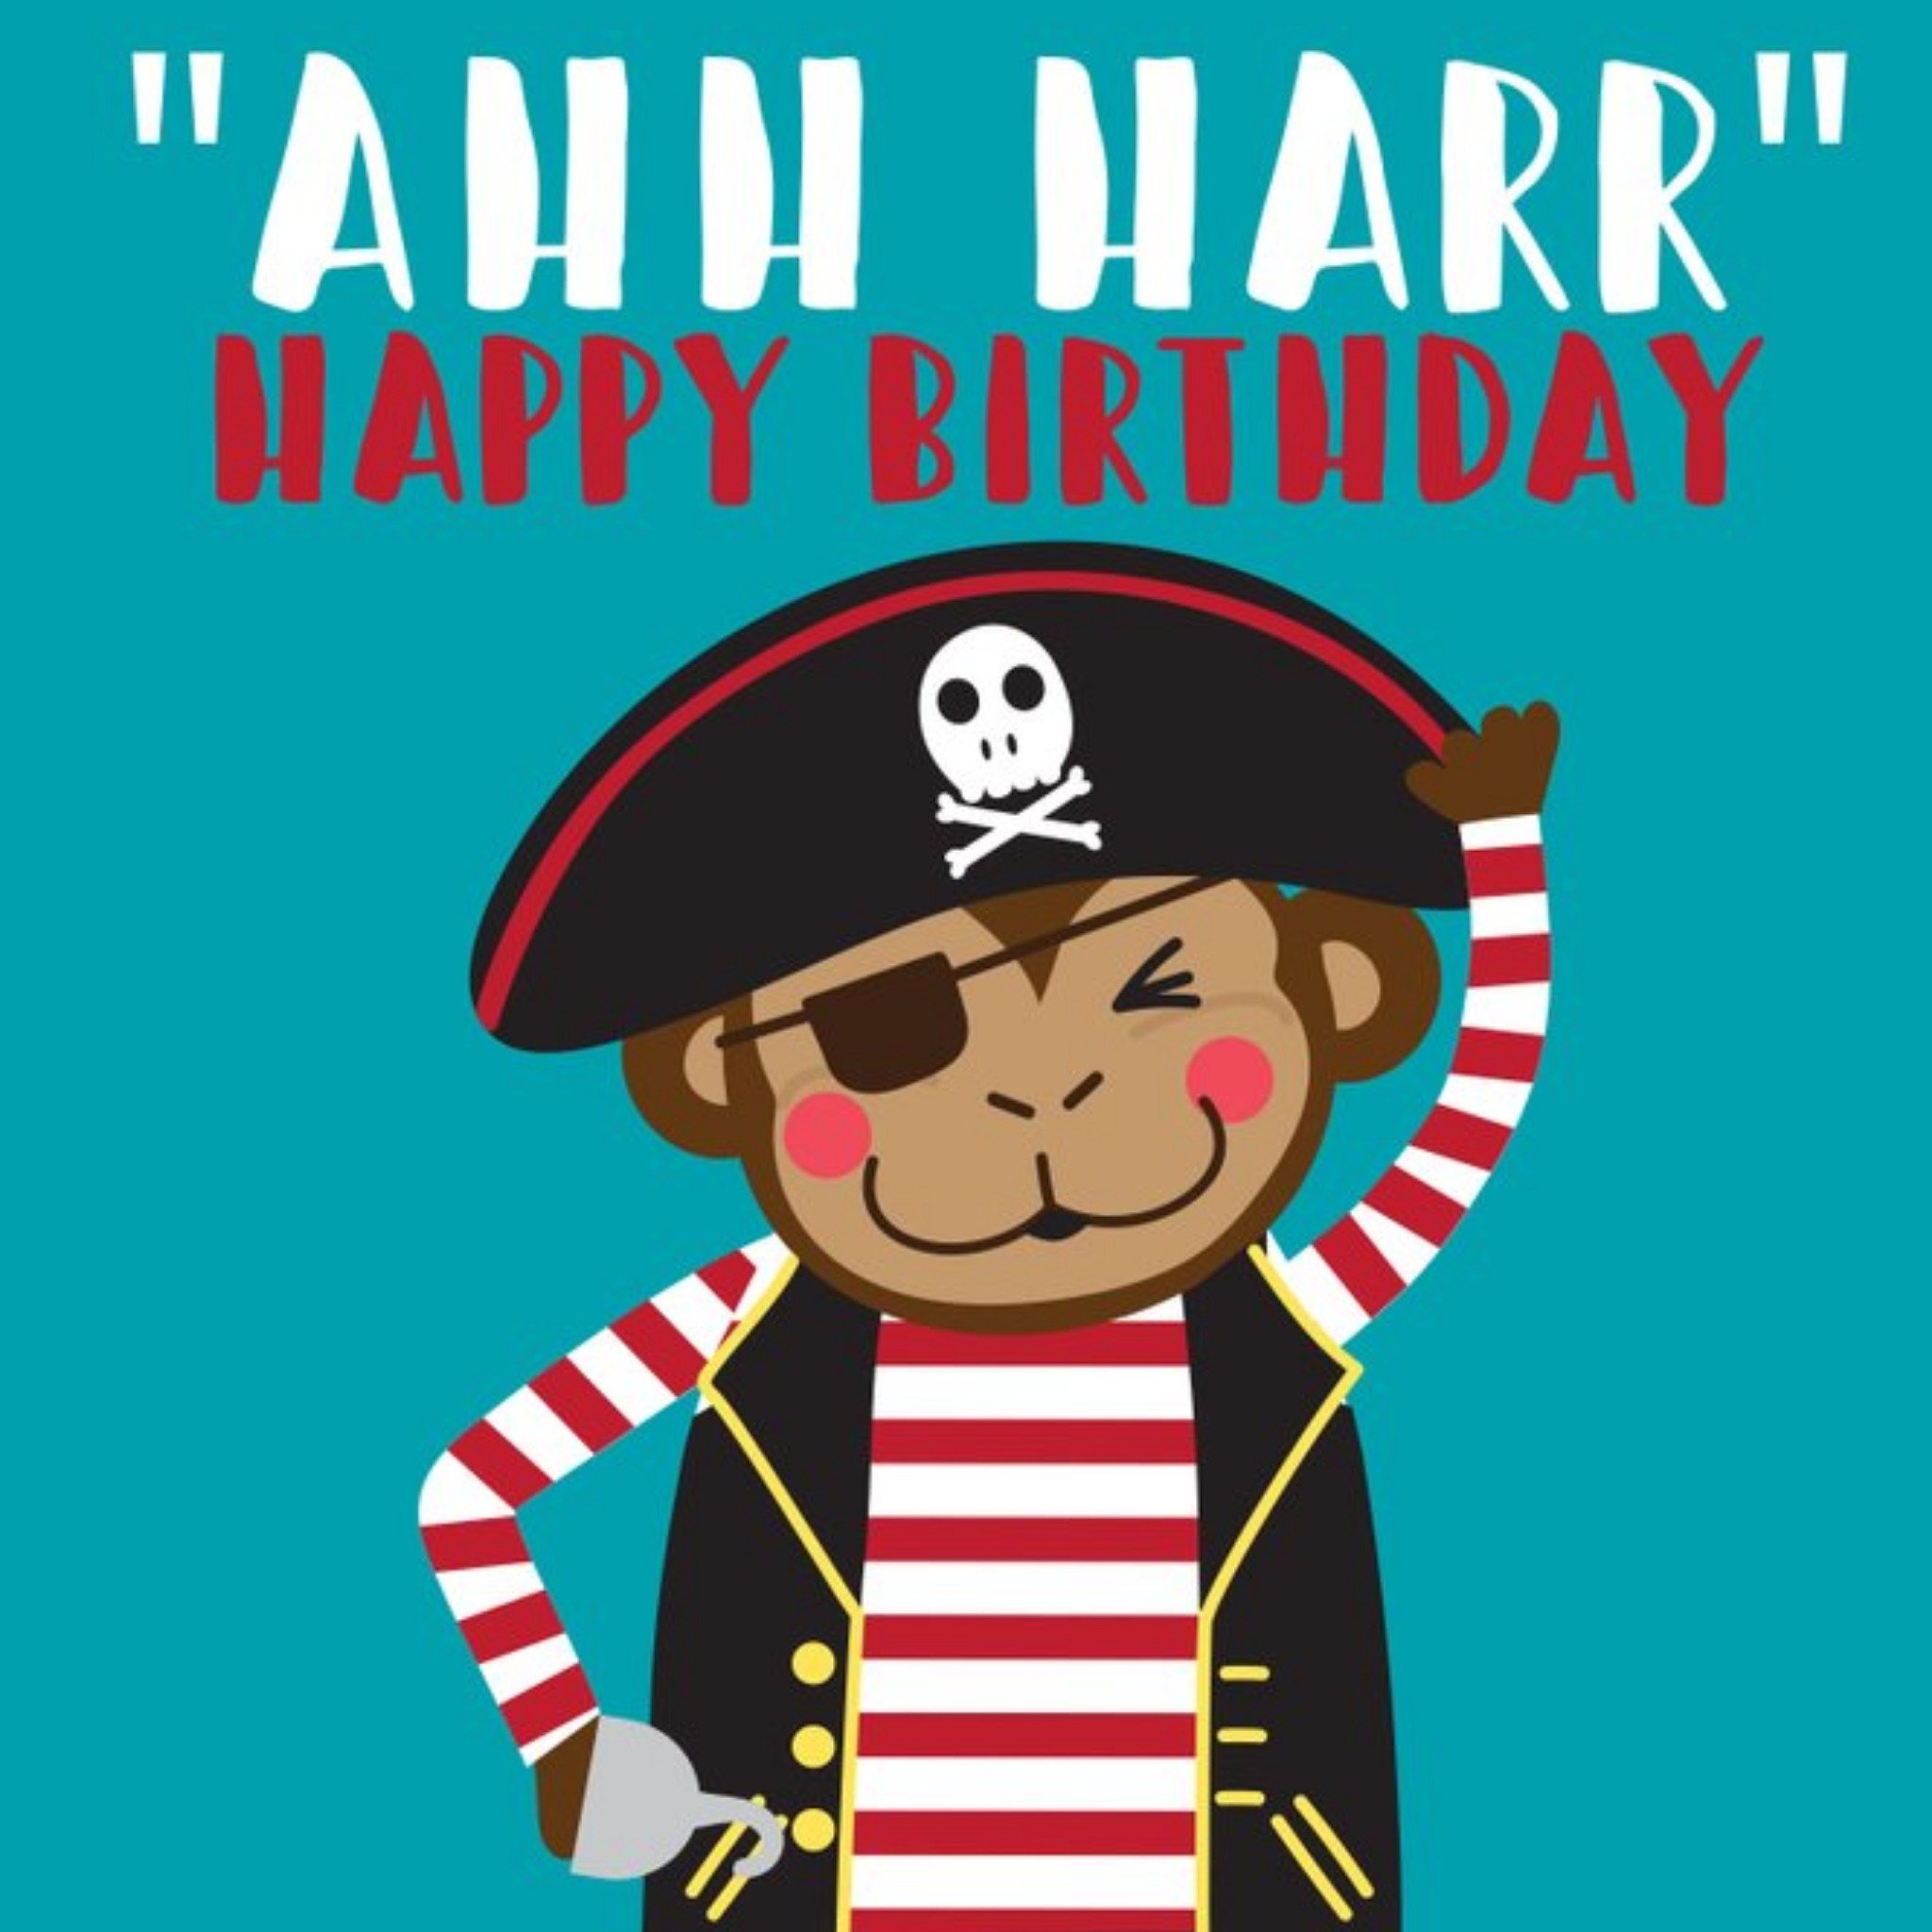 Moonpig Cute Monkey Pirate Ahh Harr Birthday Card, Square